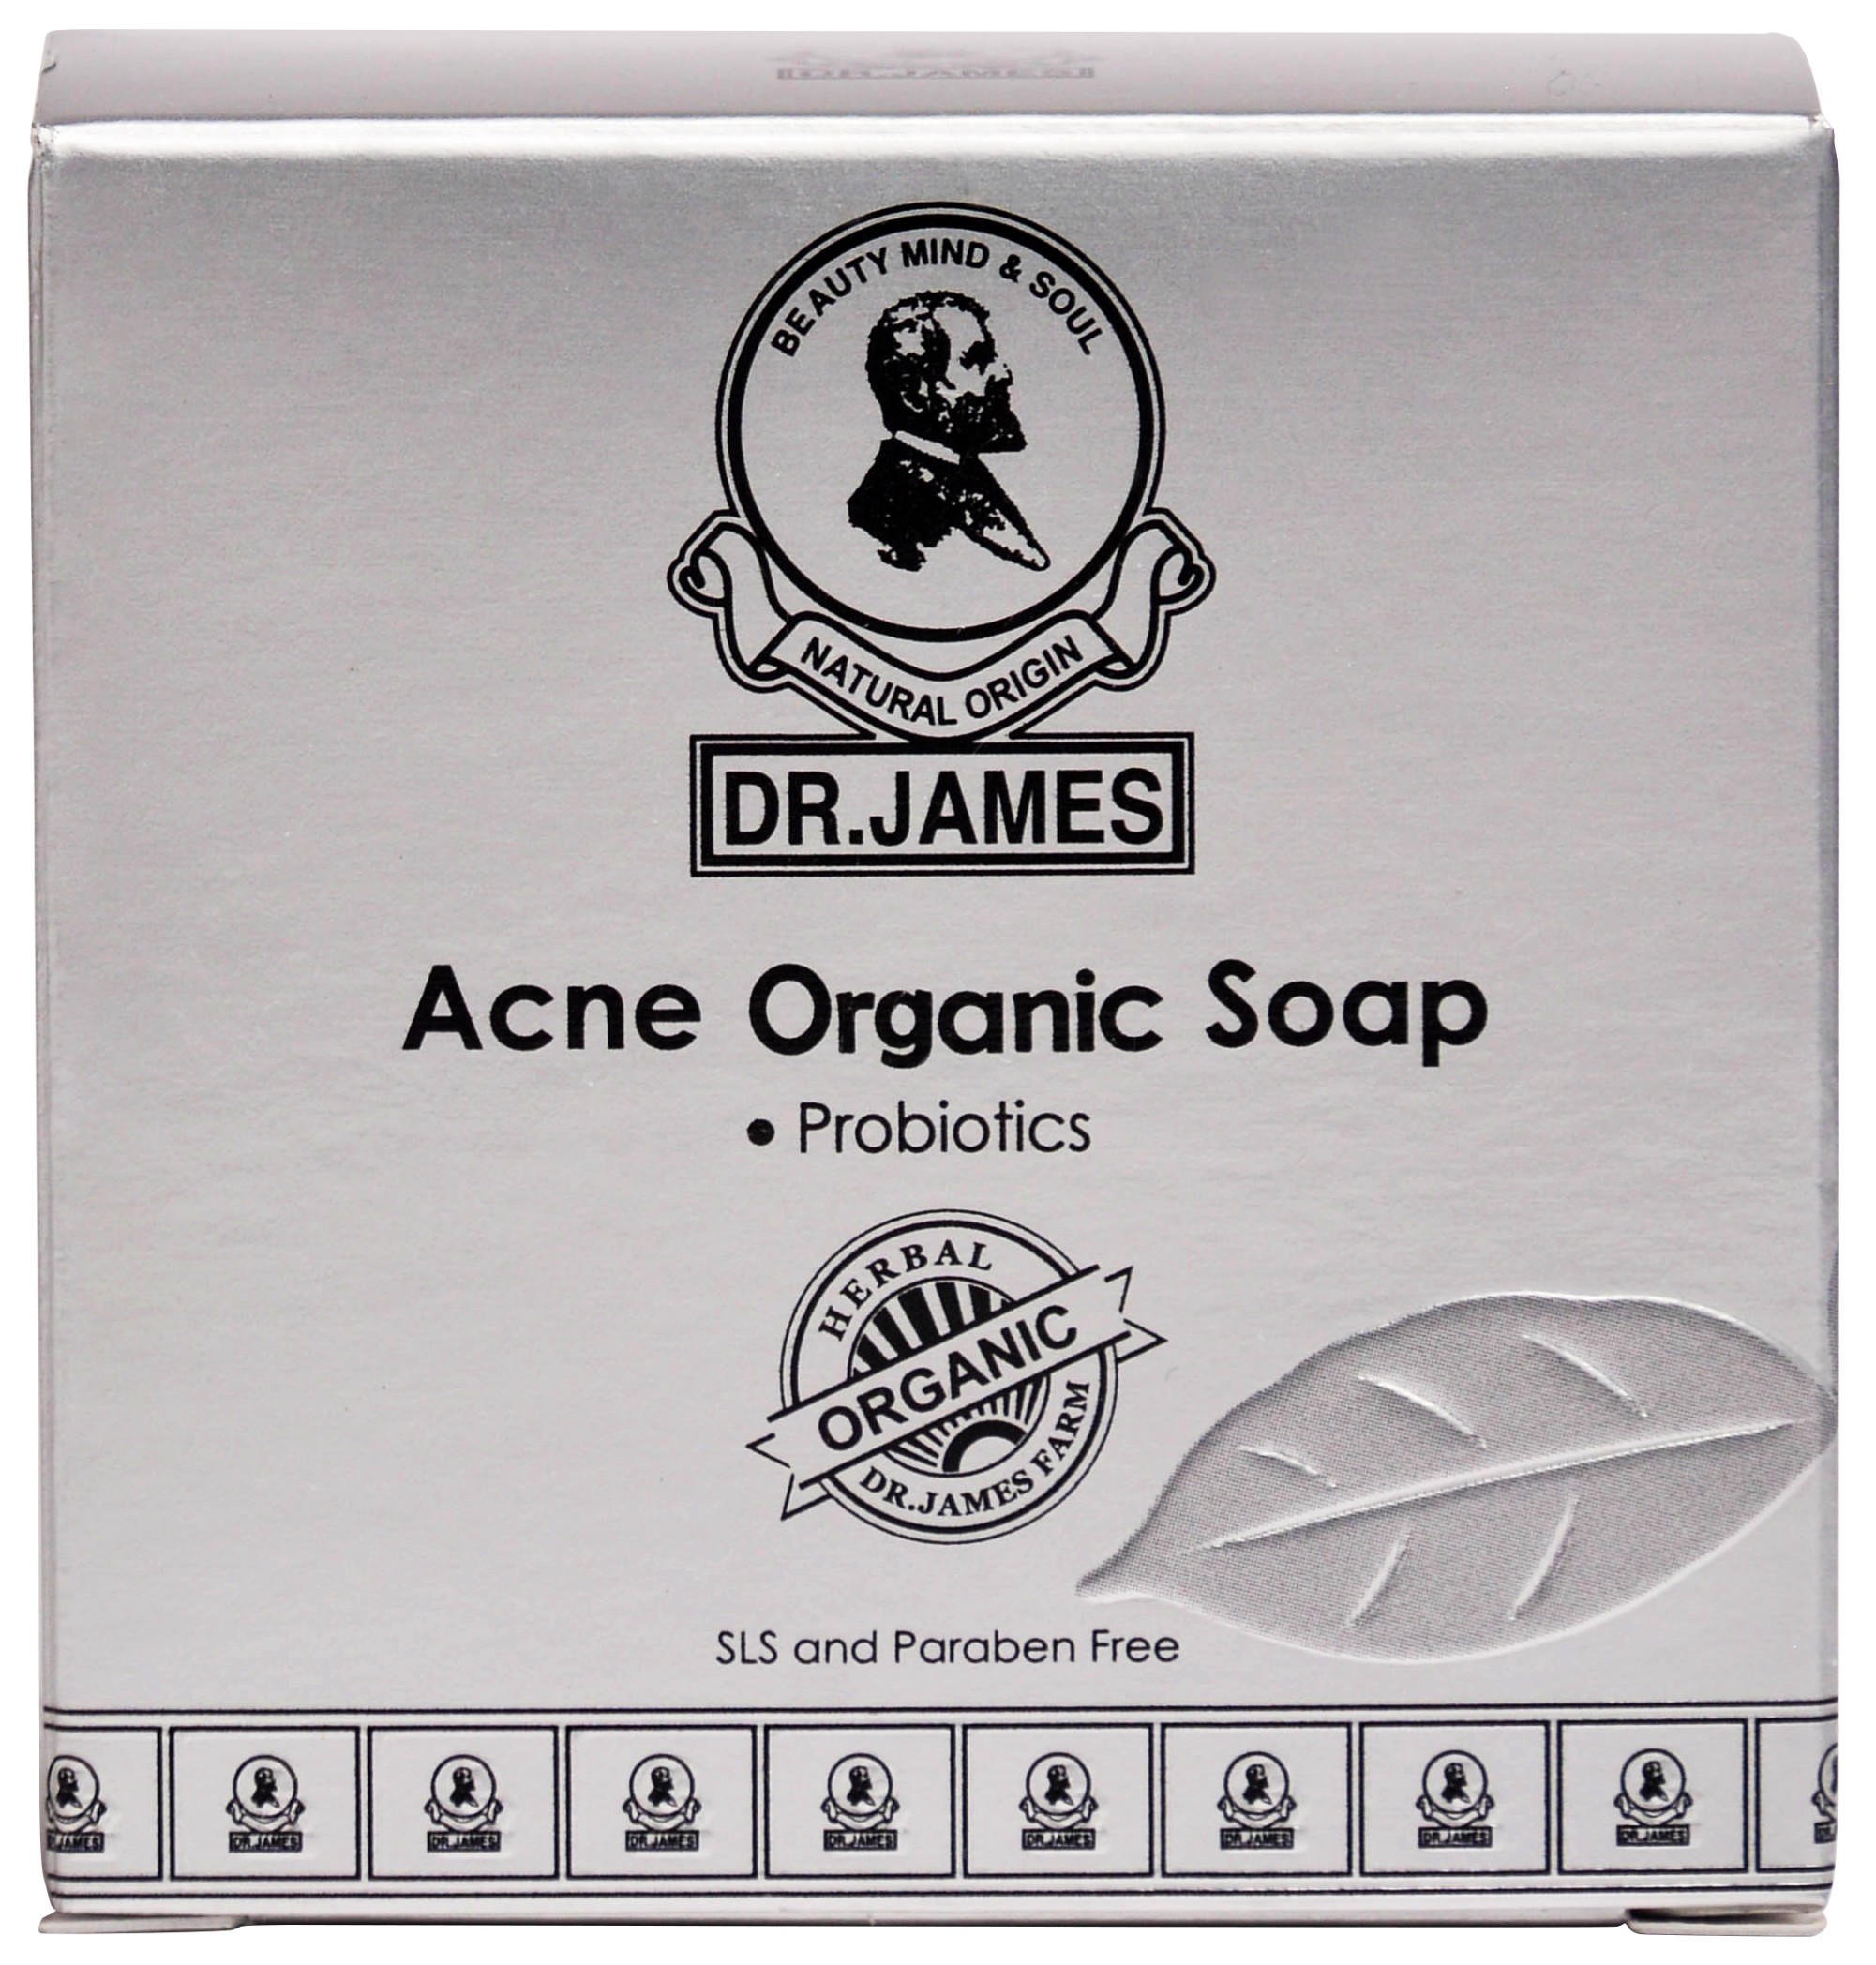 S1 DR.JAMES ACNE ORGANIC SOAP 80g.